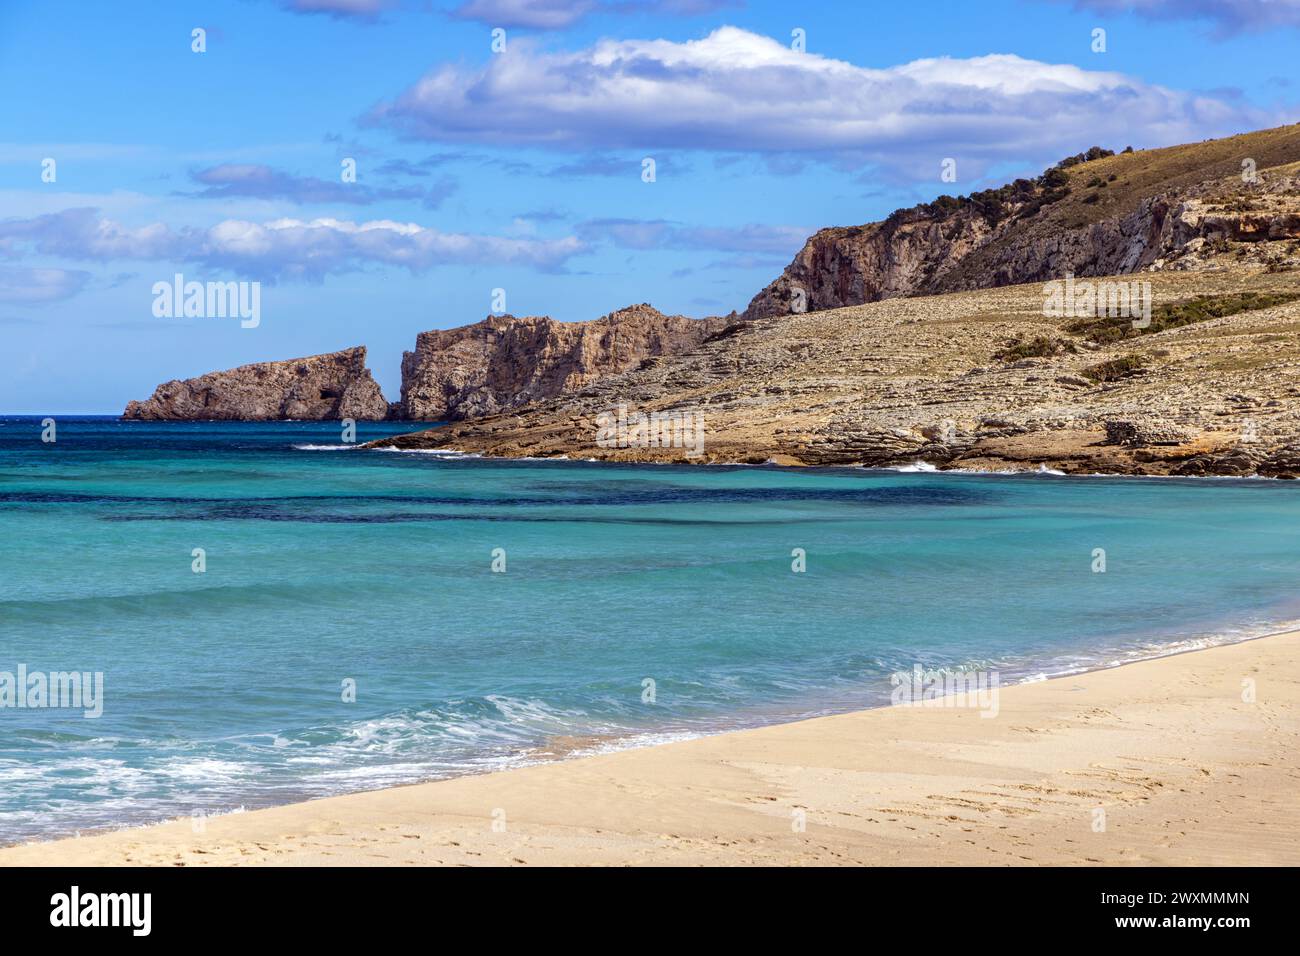 The beautiful sandy beach at Cala Mesquida, Mallorca, Balearic Islands, Spain Stock Photo